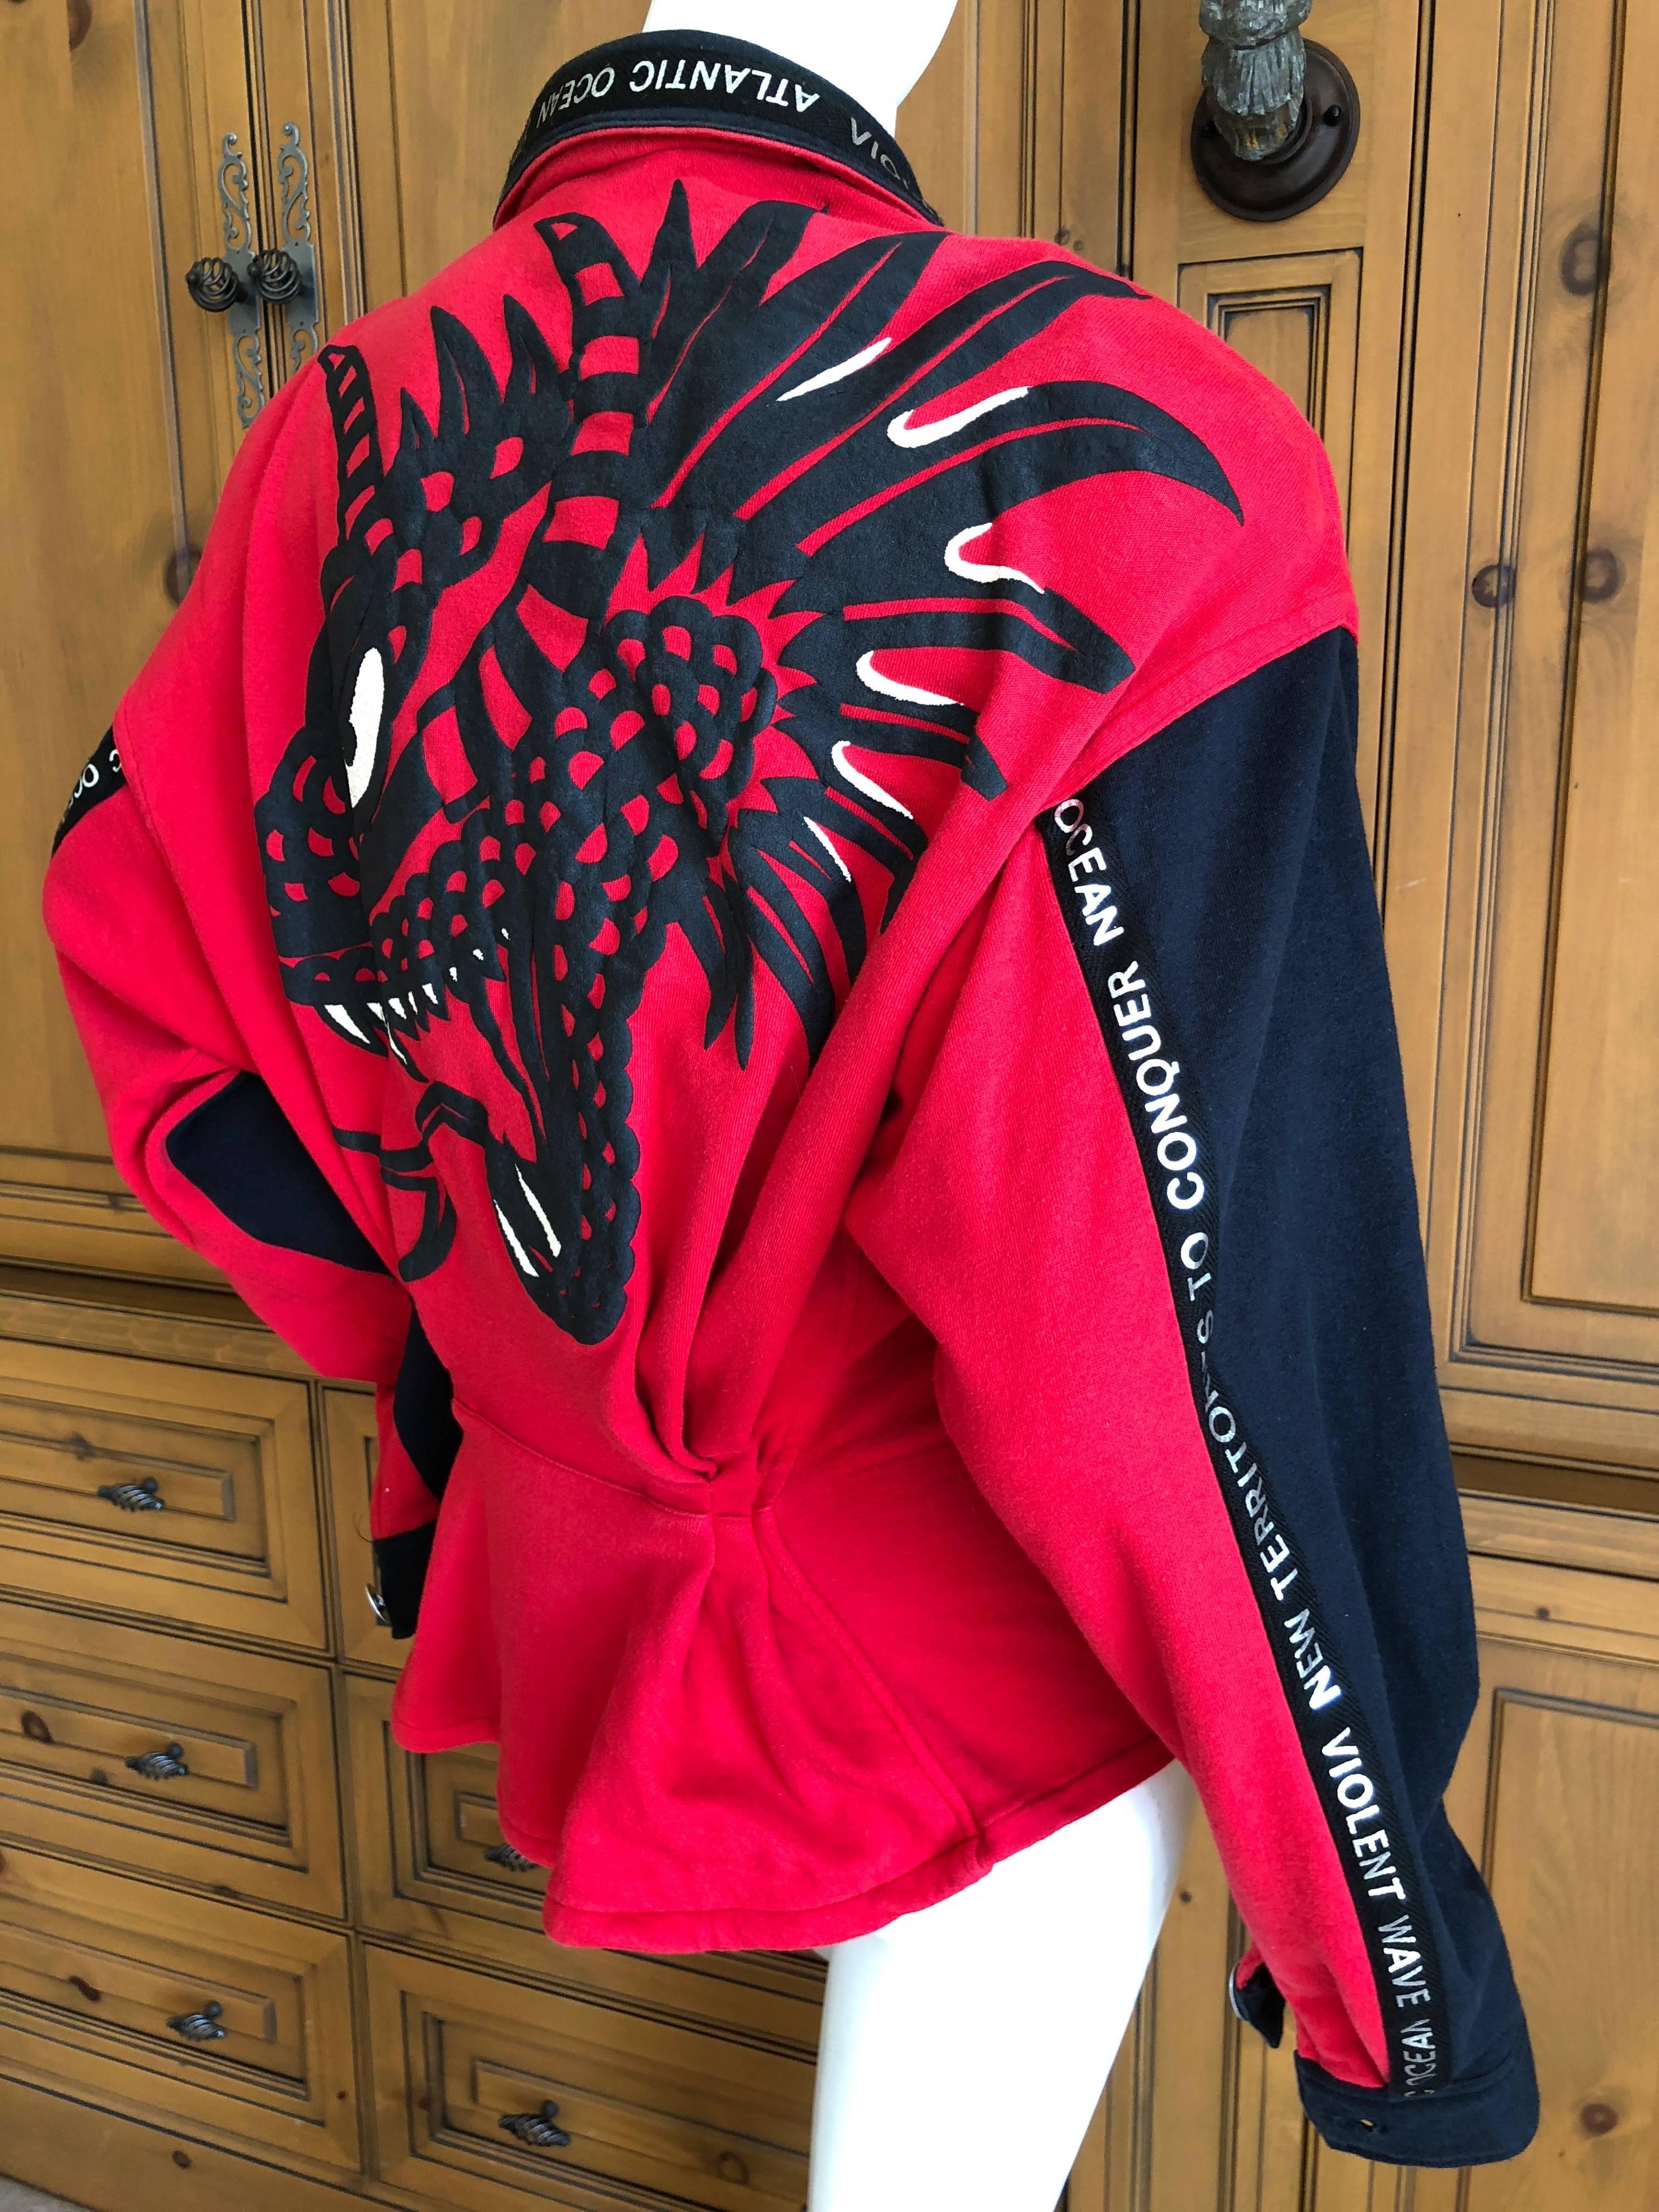 Kansai Yamamoto 1980's Red Dragon Jacket 1